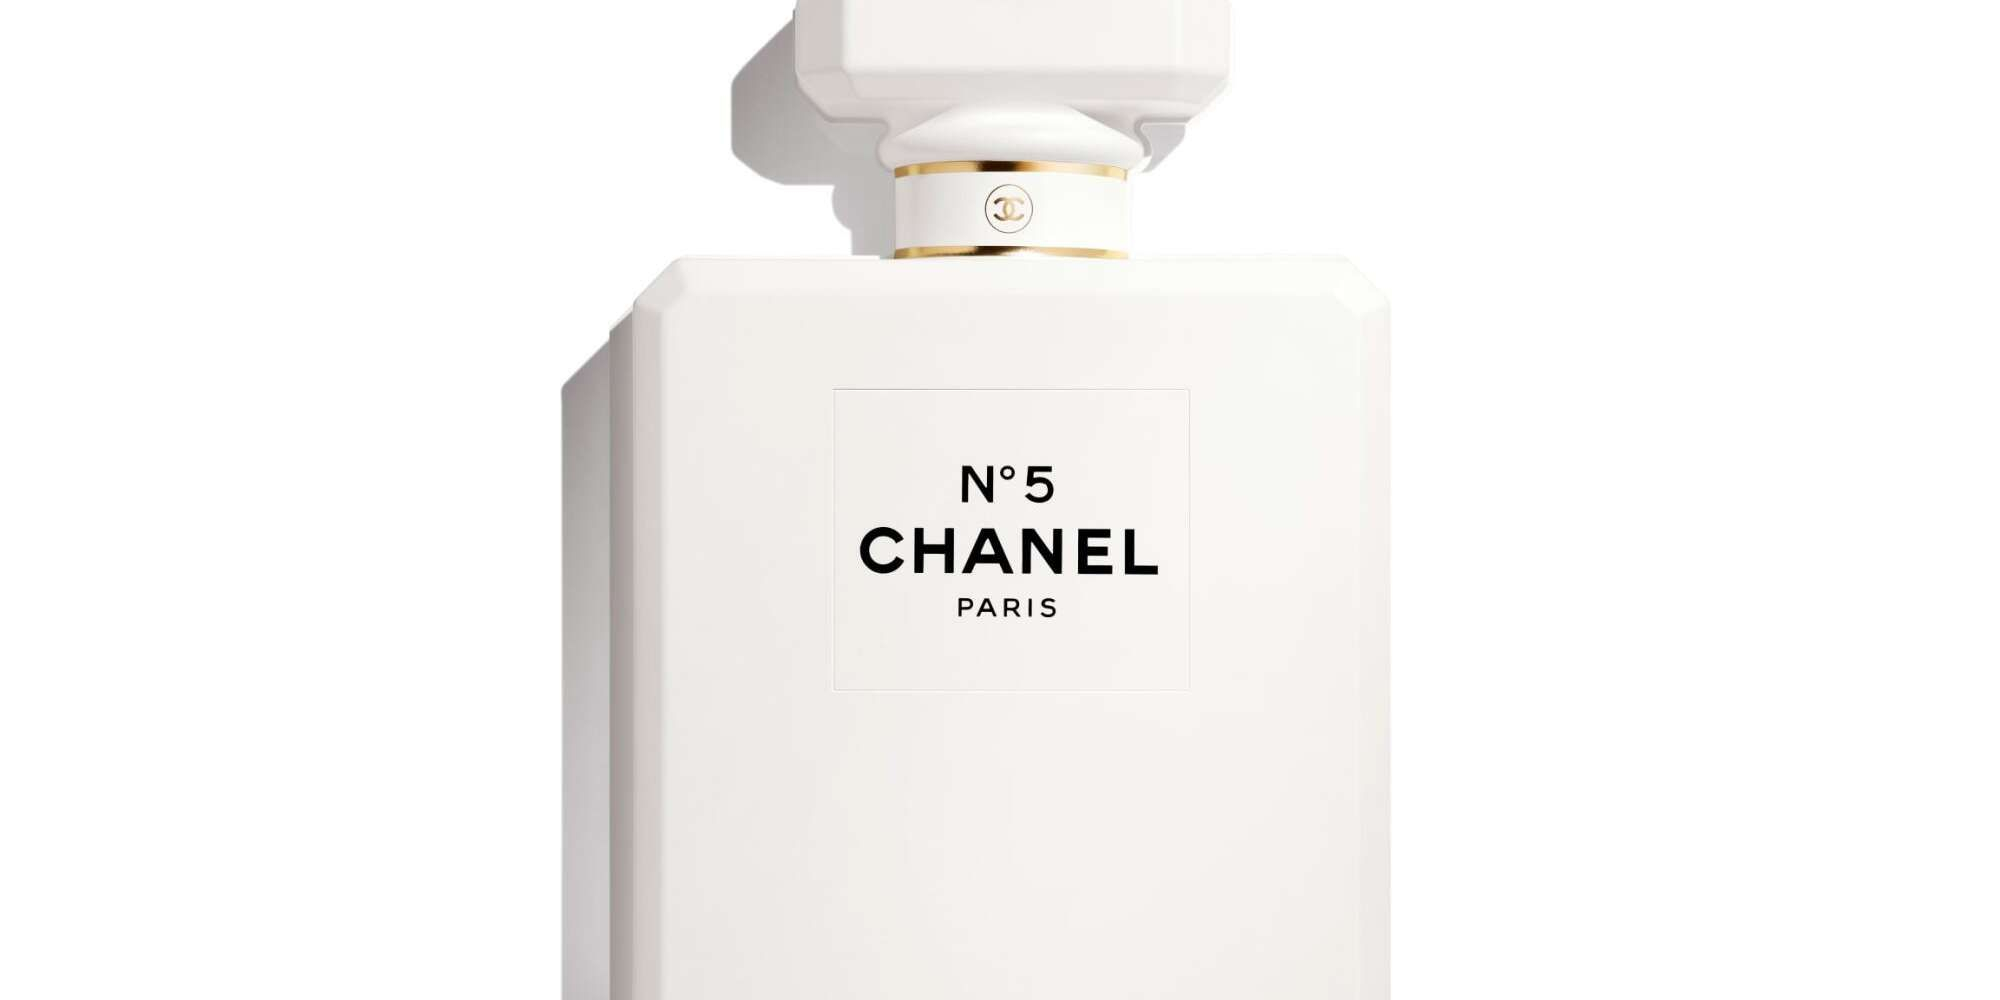 Tiktok Influencer Goes Viral Roasting Chanel'S $825 Advent